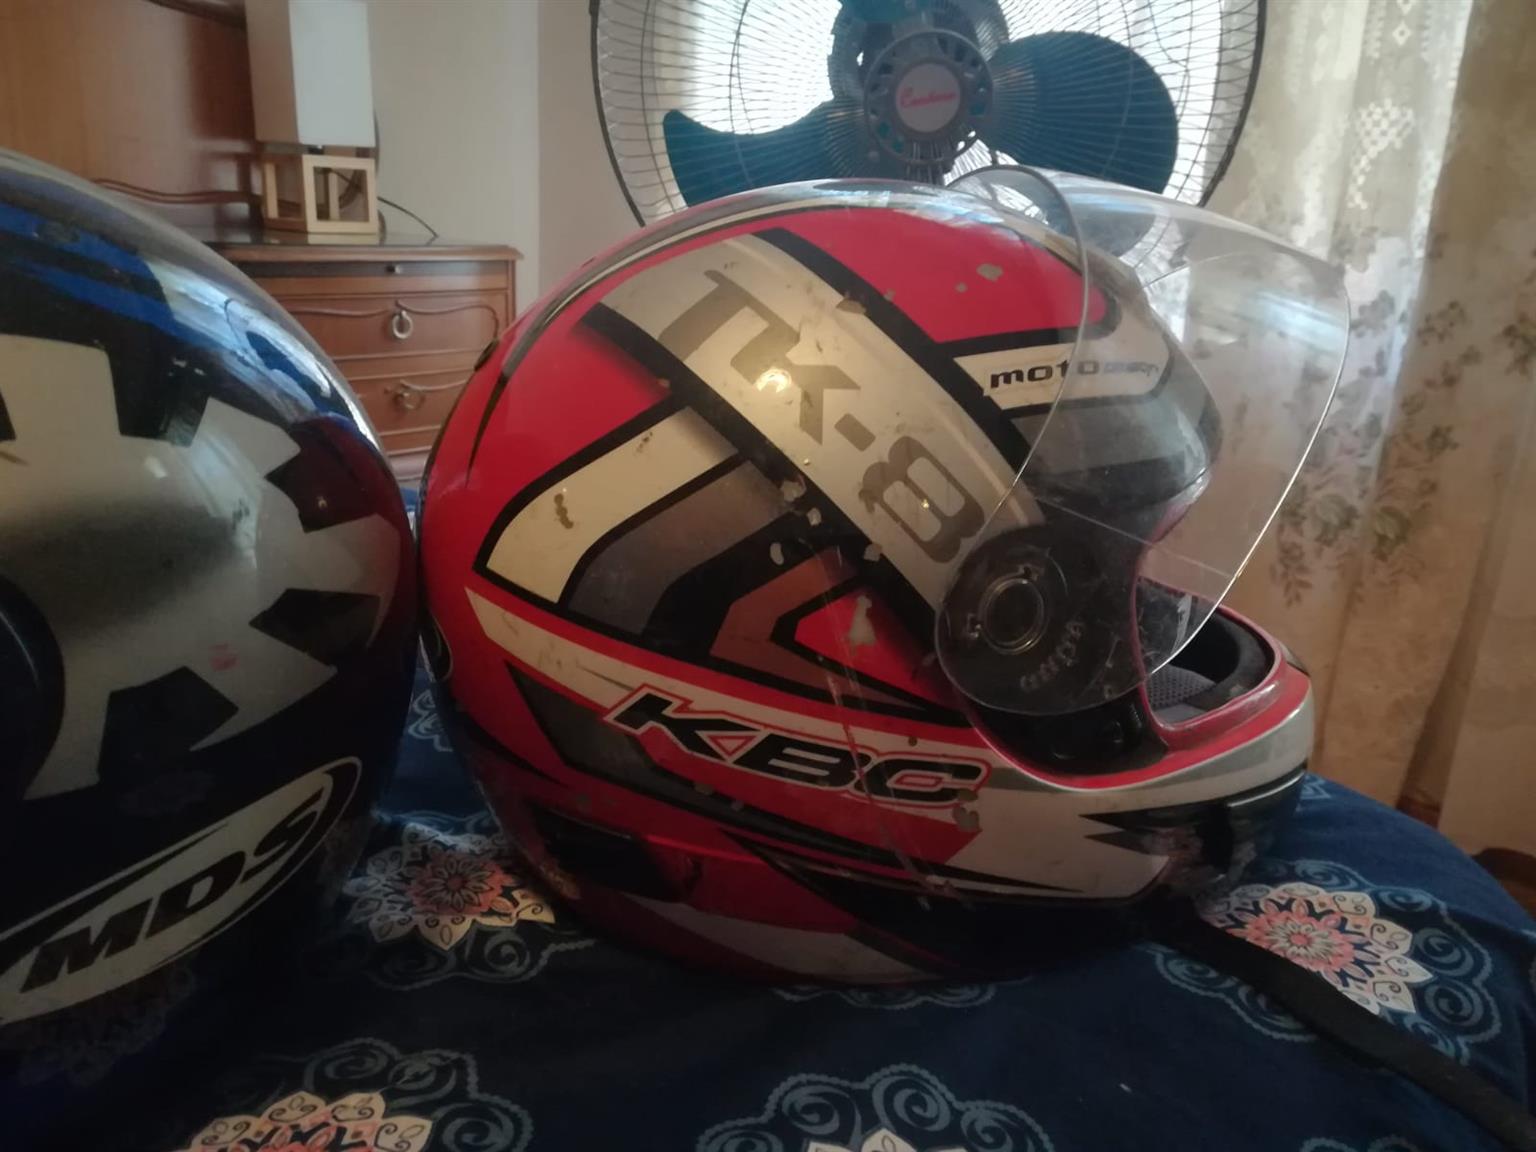 Bike helmets for sale